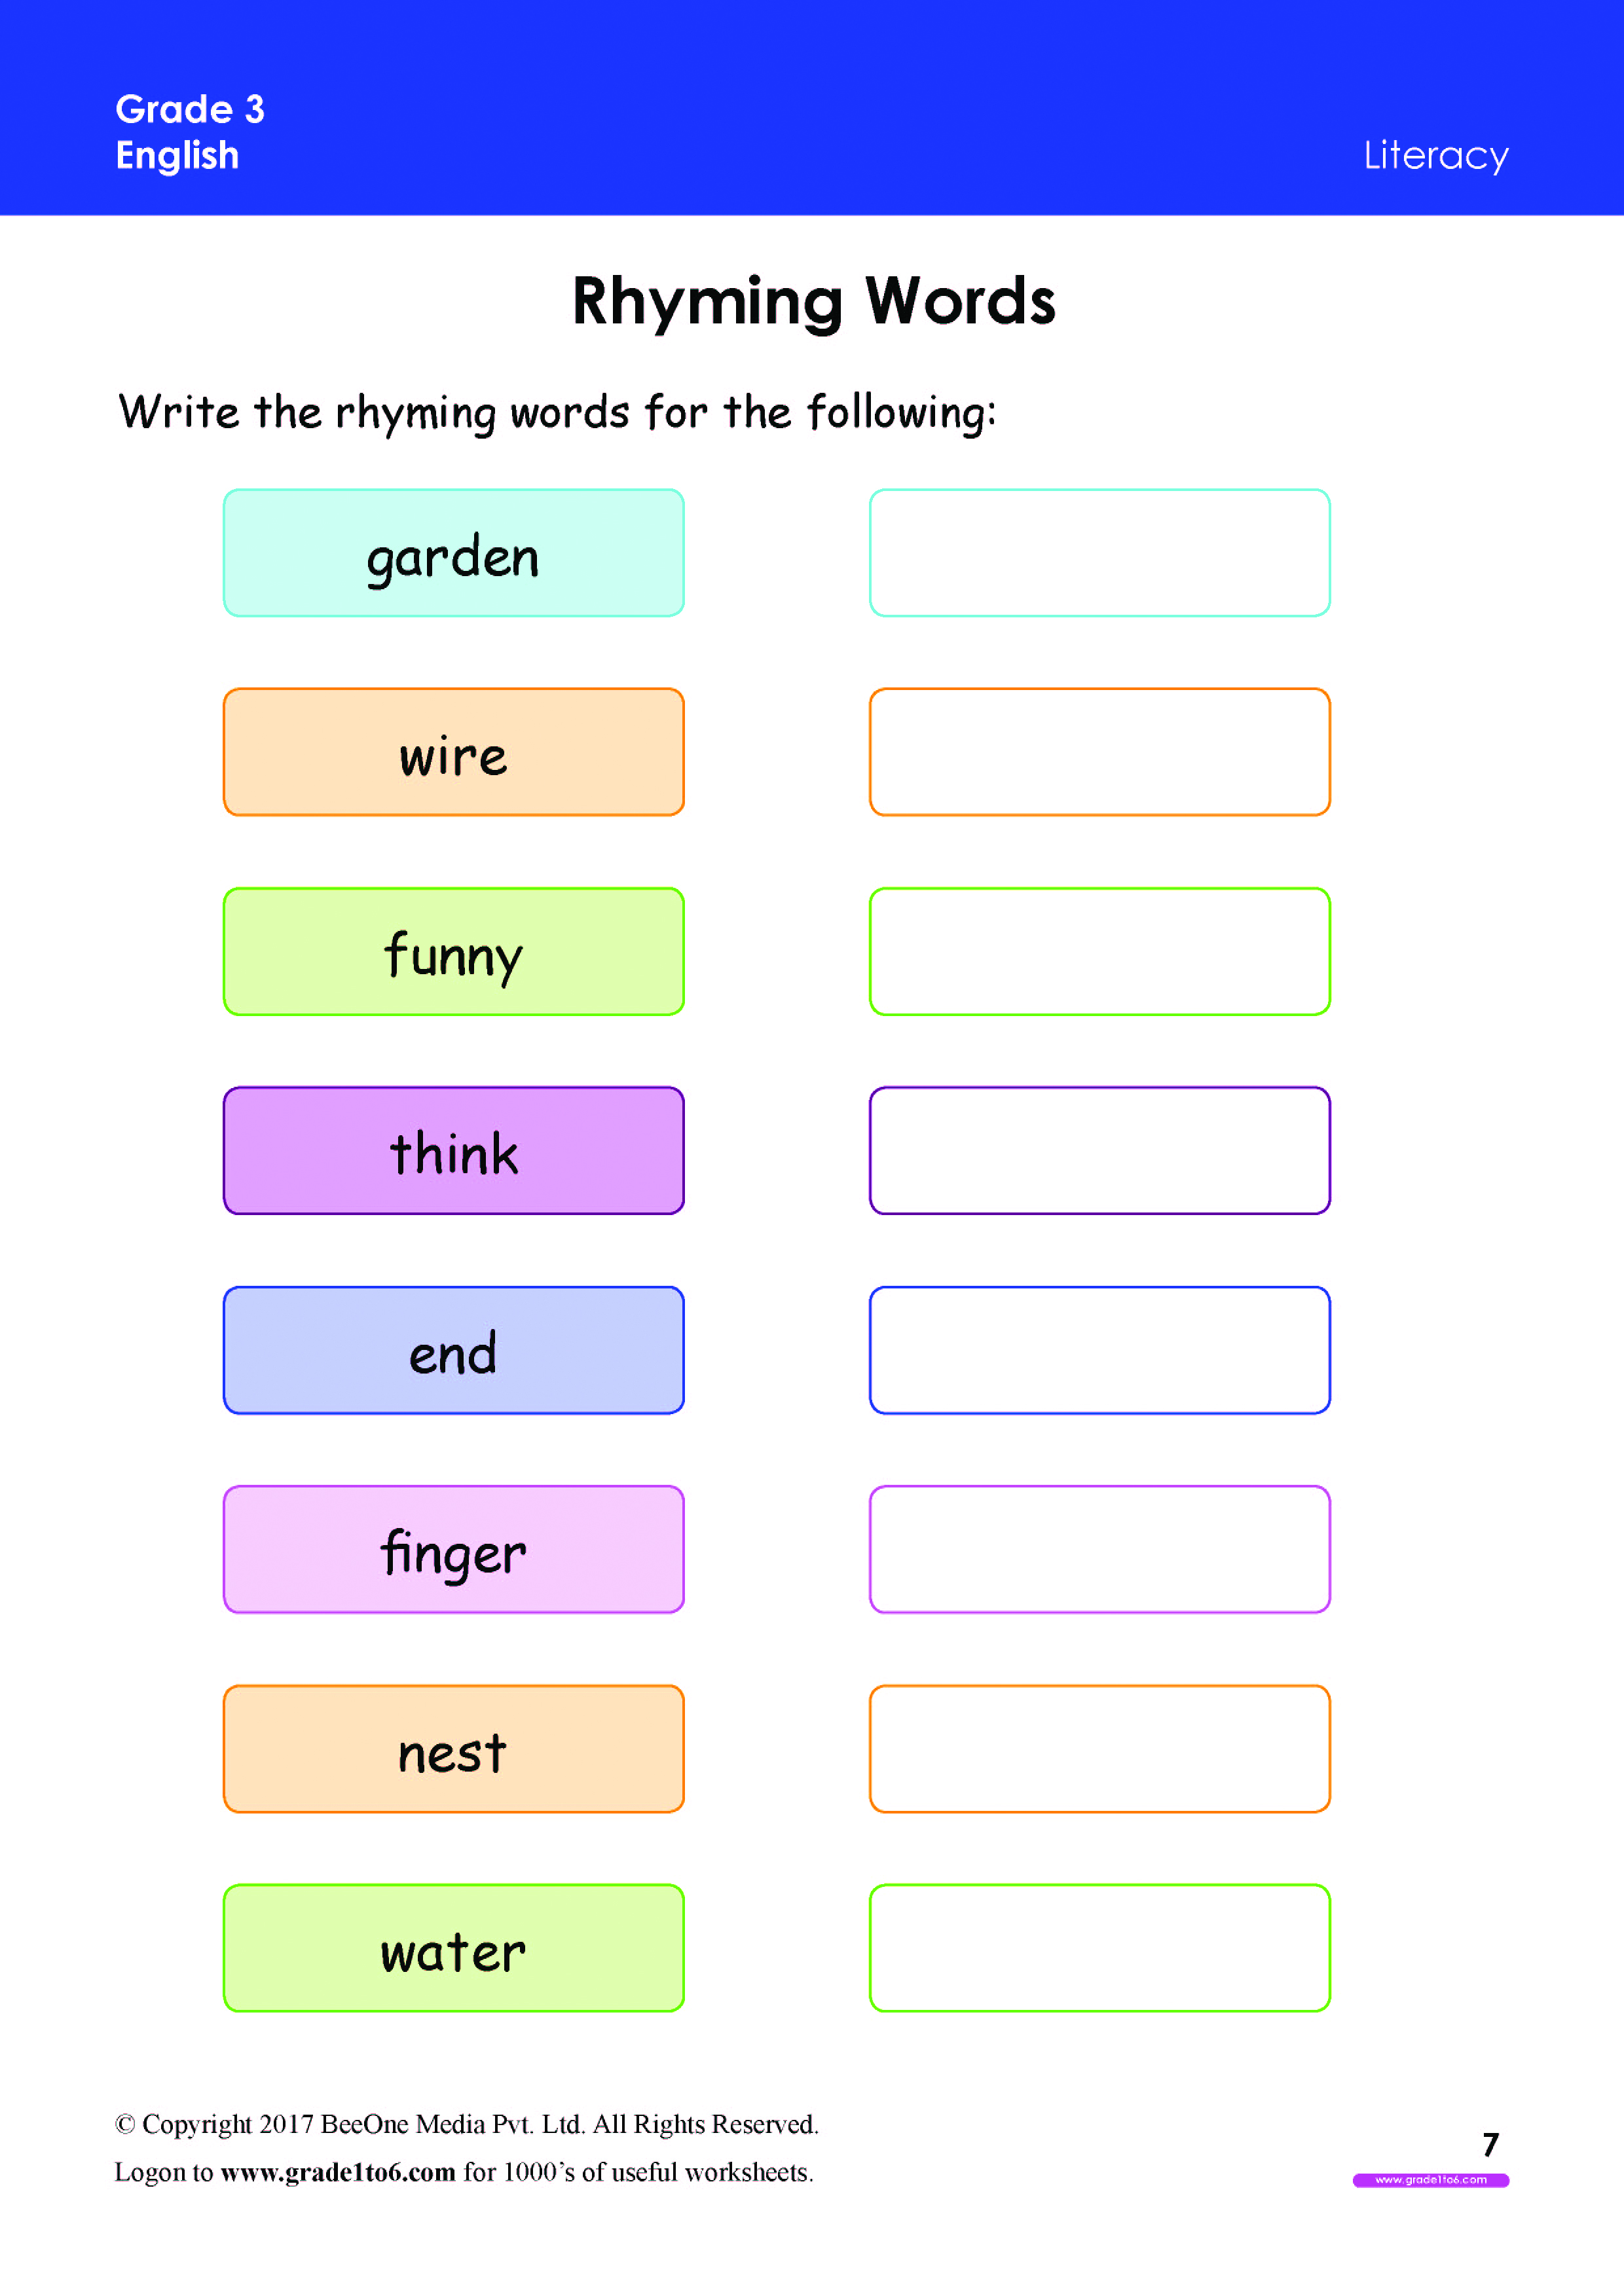 Rhyming Words Worksheets Grade 3 www grade1to6